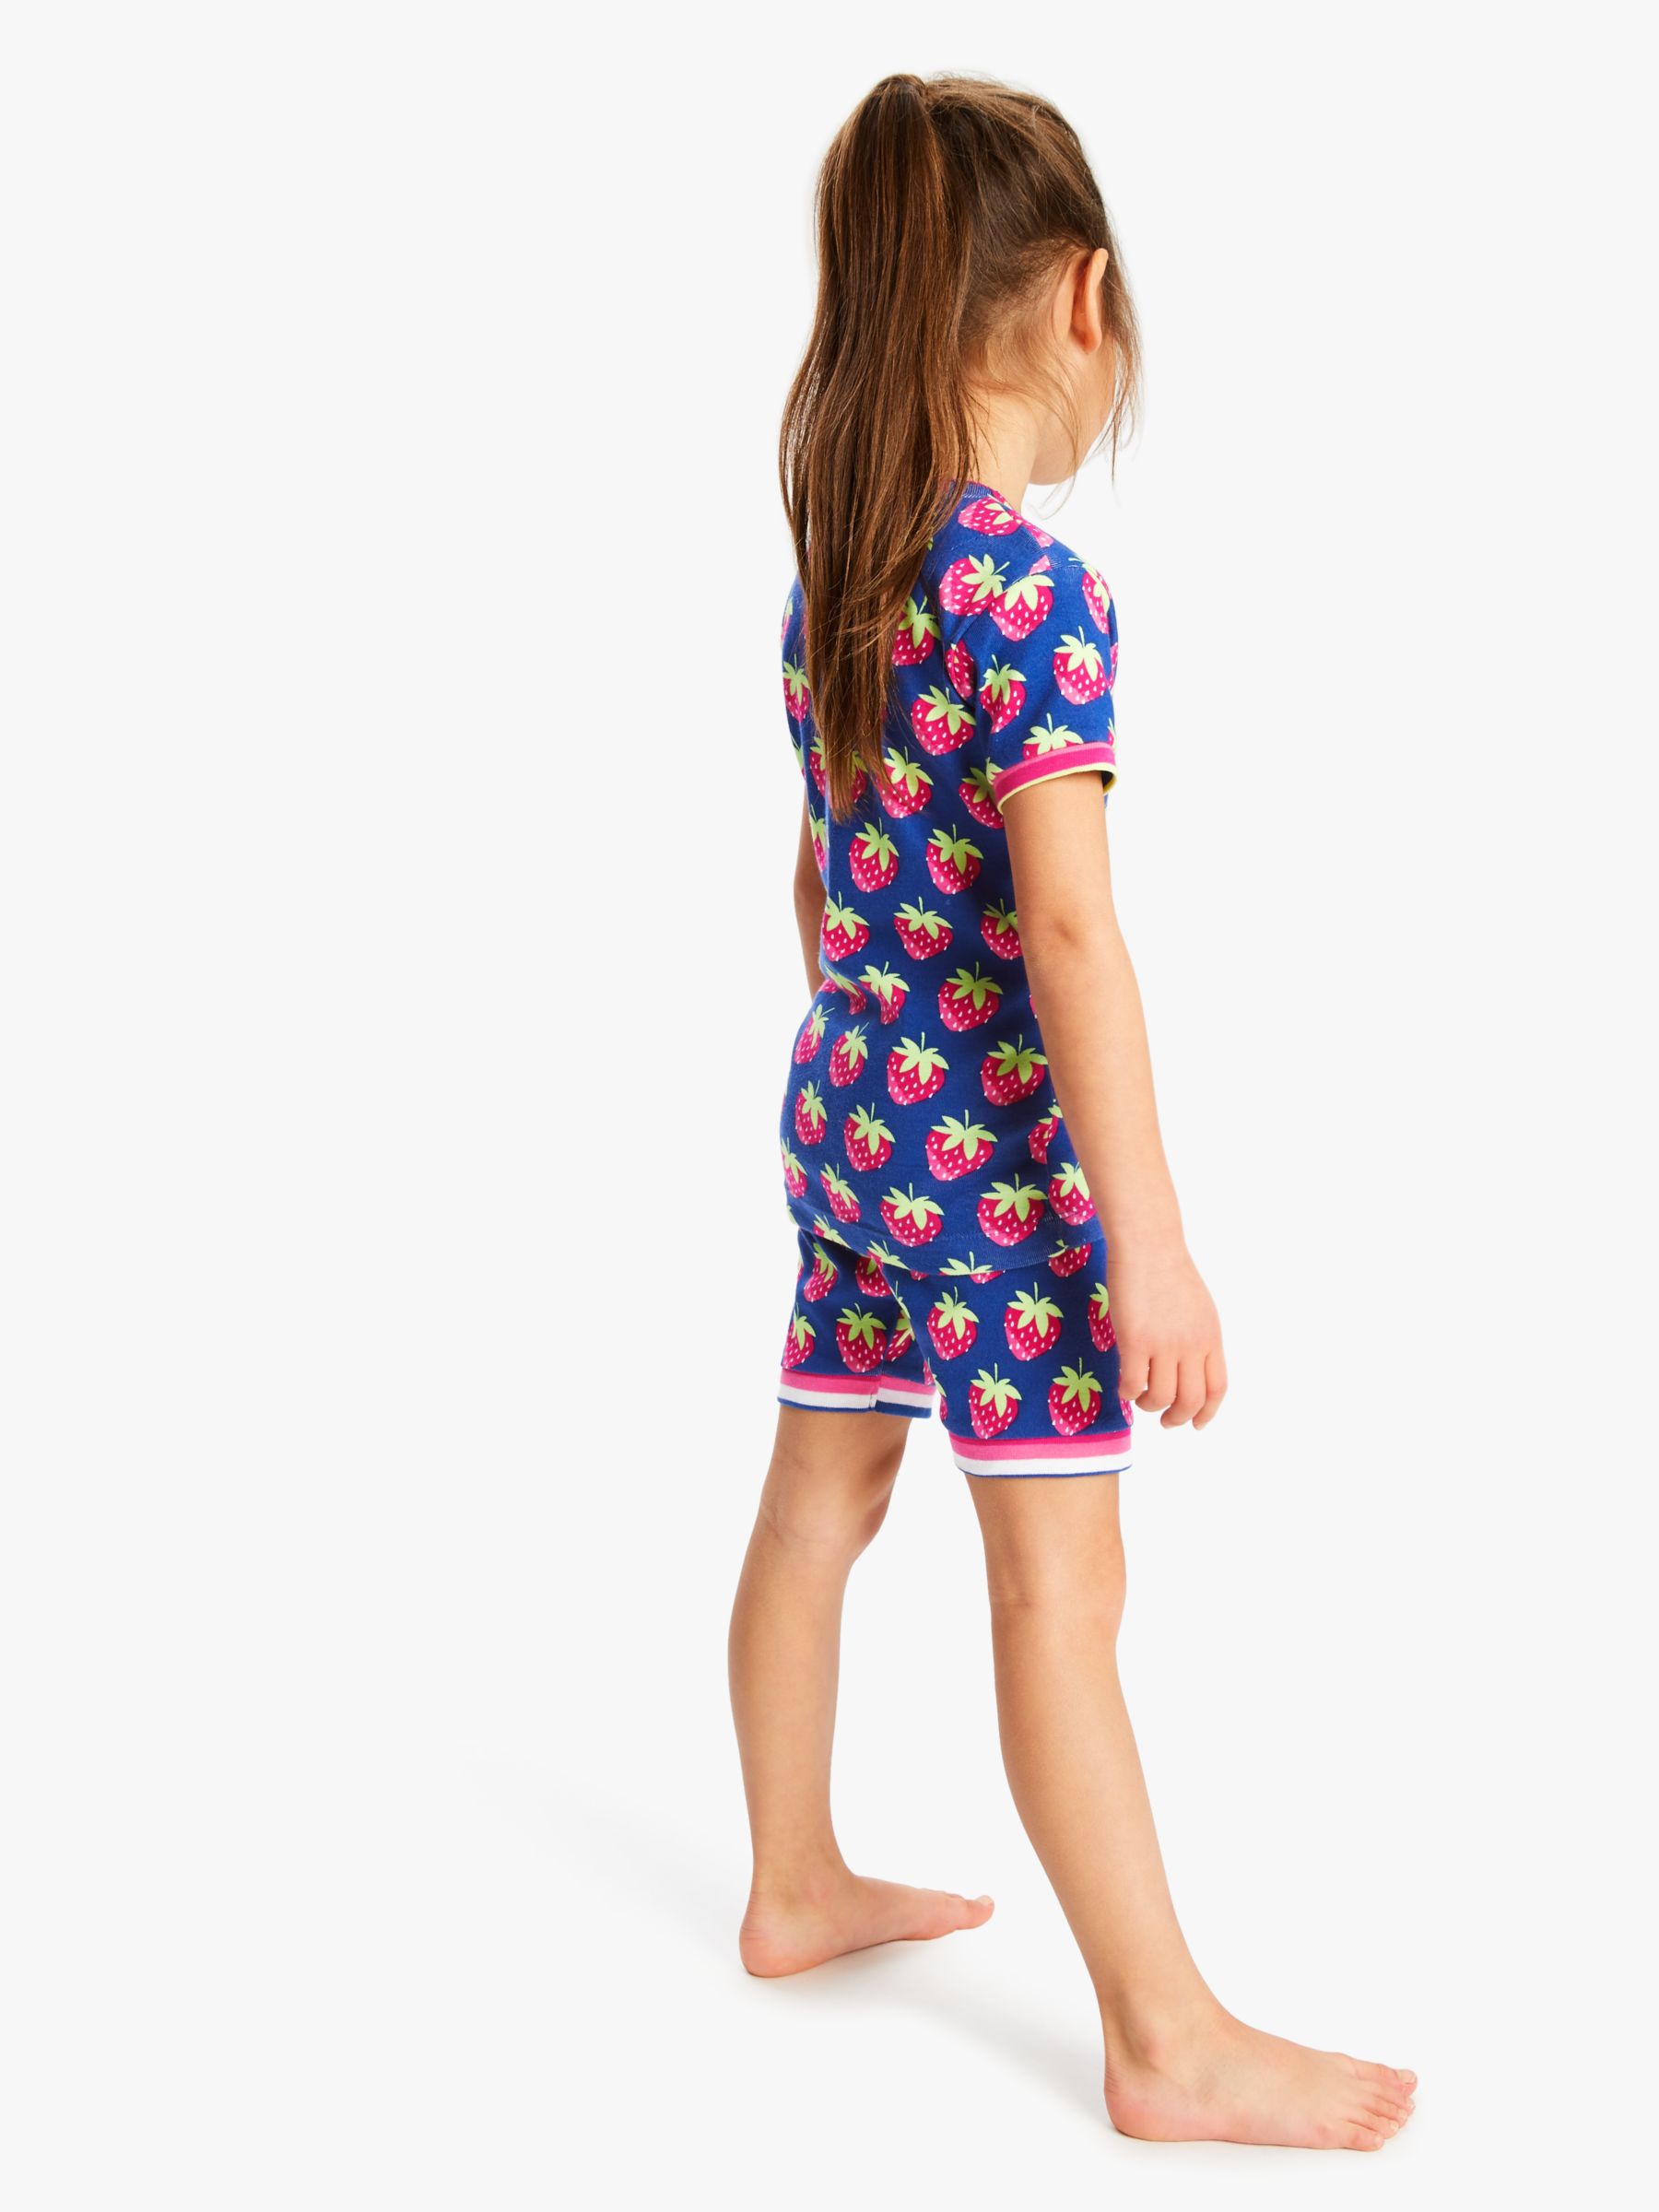 Hatley Girls' Strawberry Print Short Pyjamas, Blue